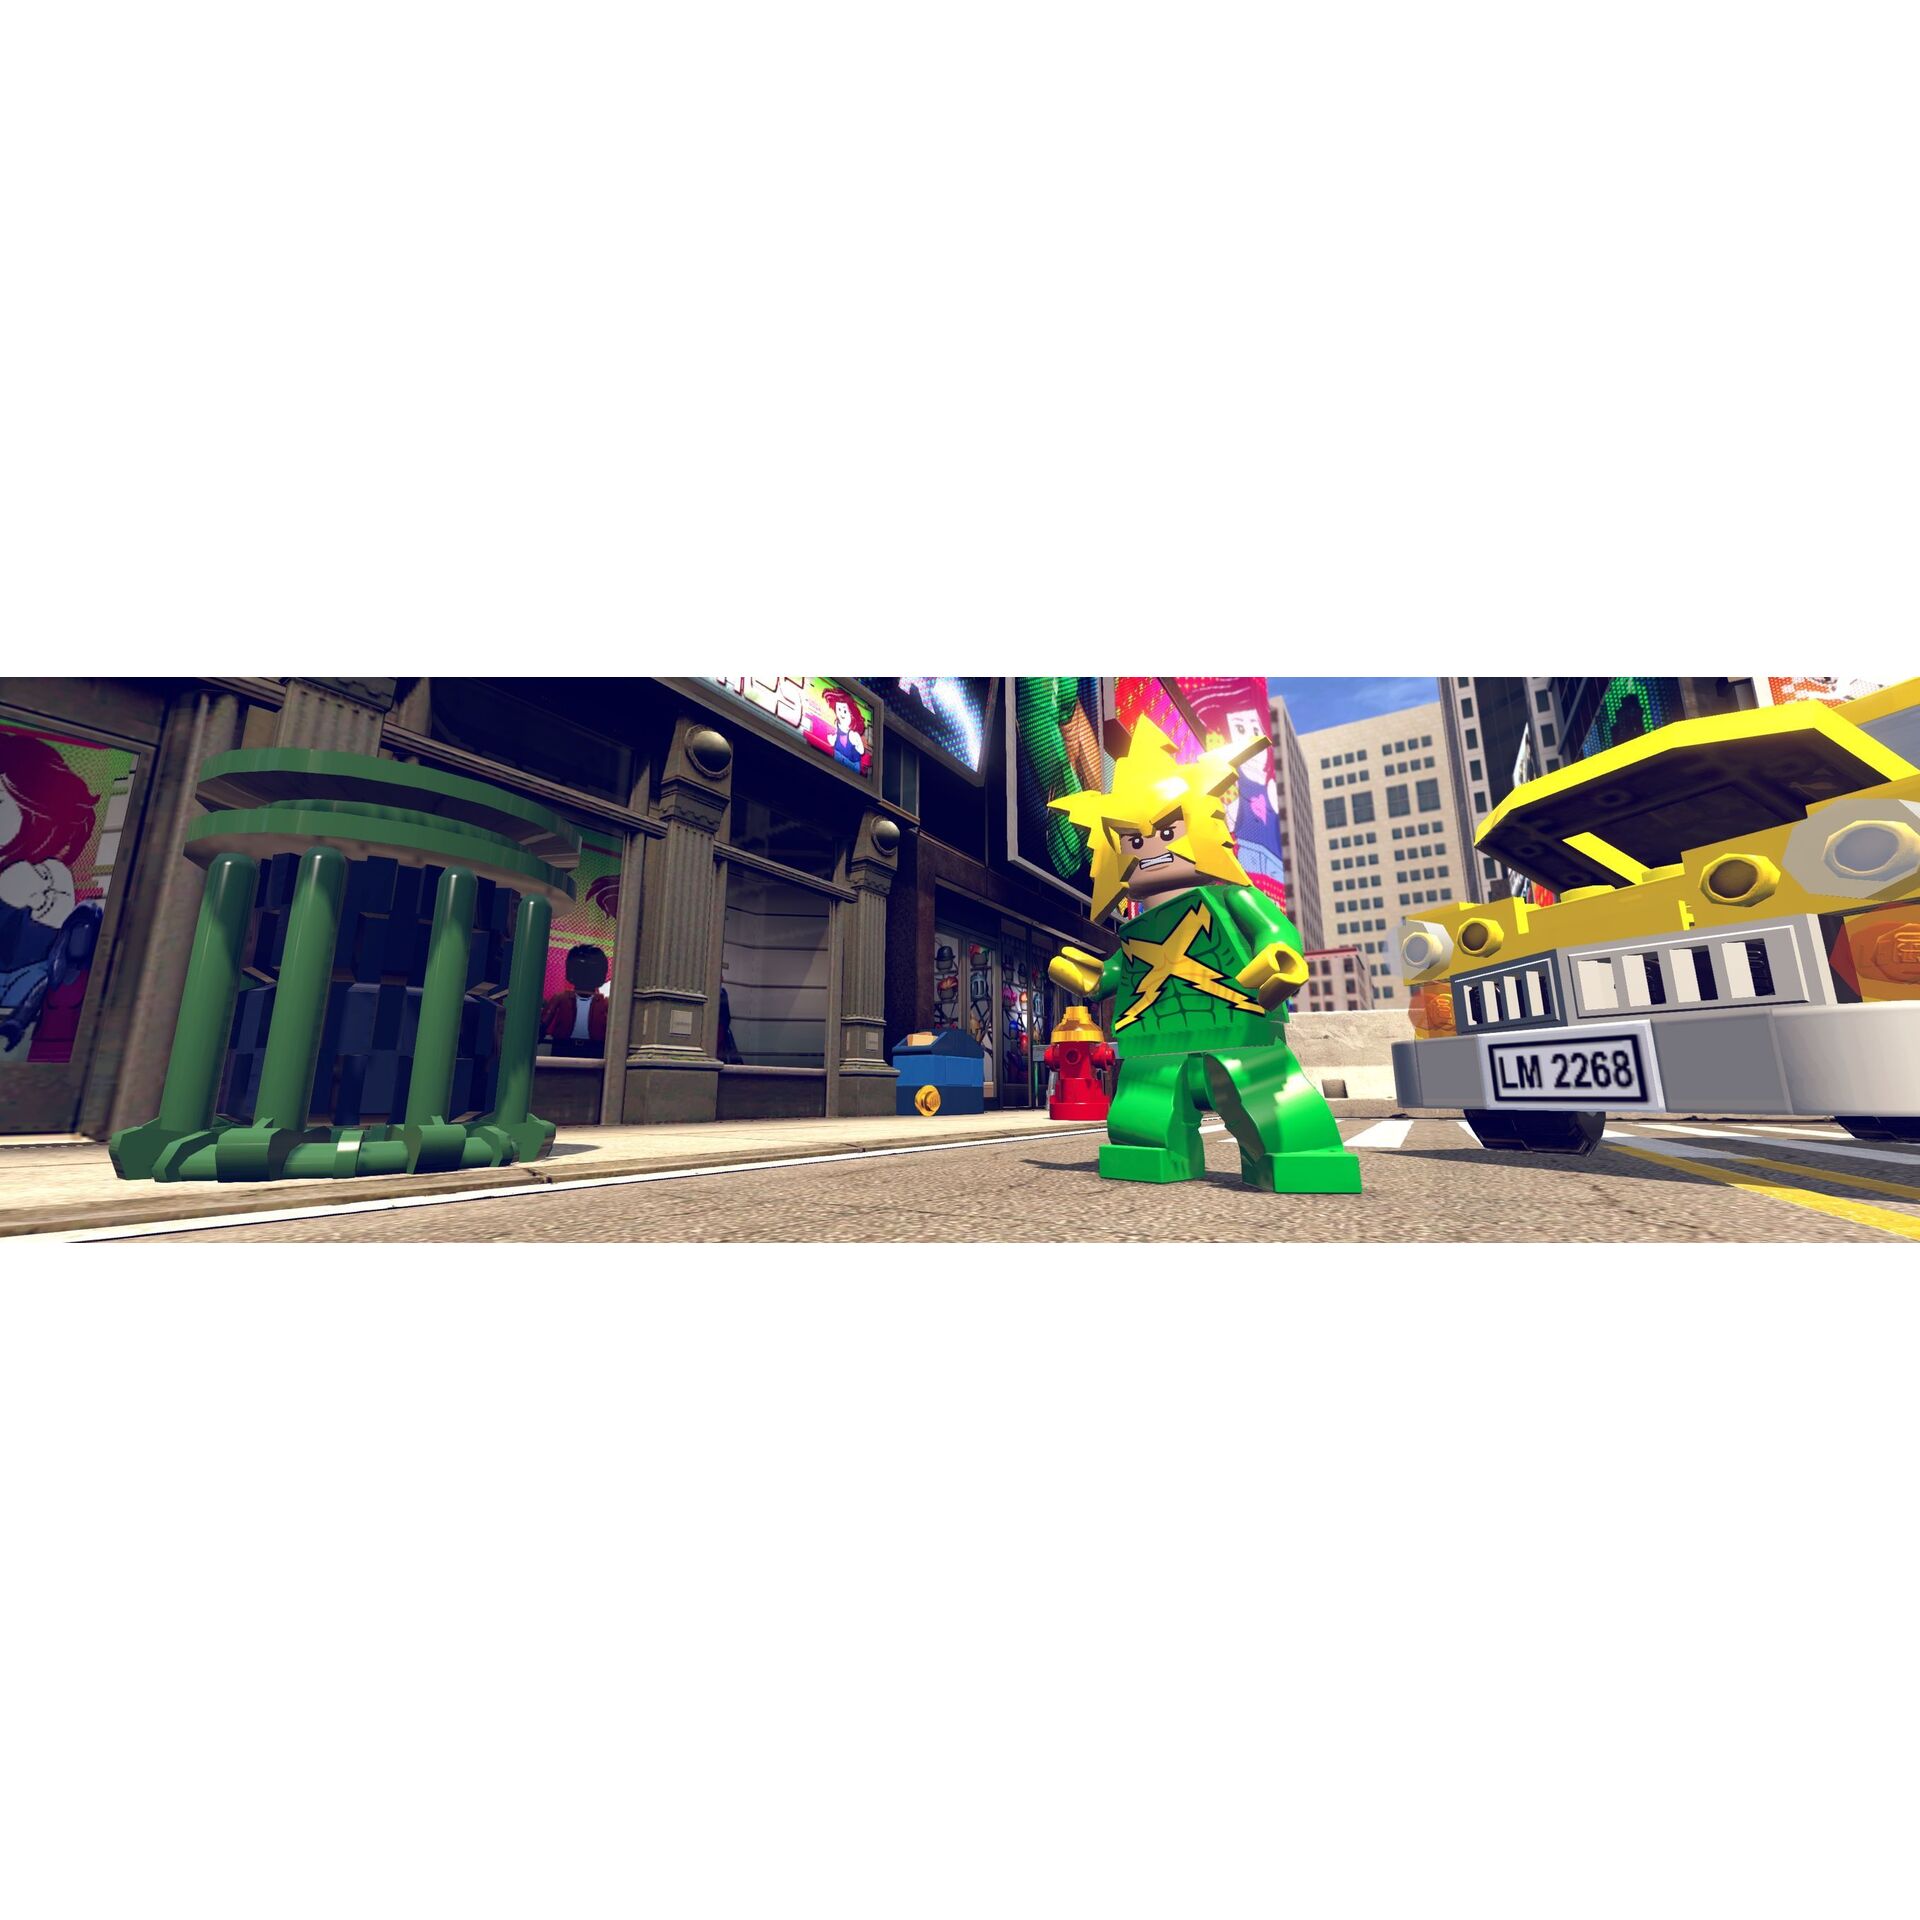 Игра WB LEGO Marvel's Super Heroes (PS4)